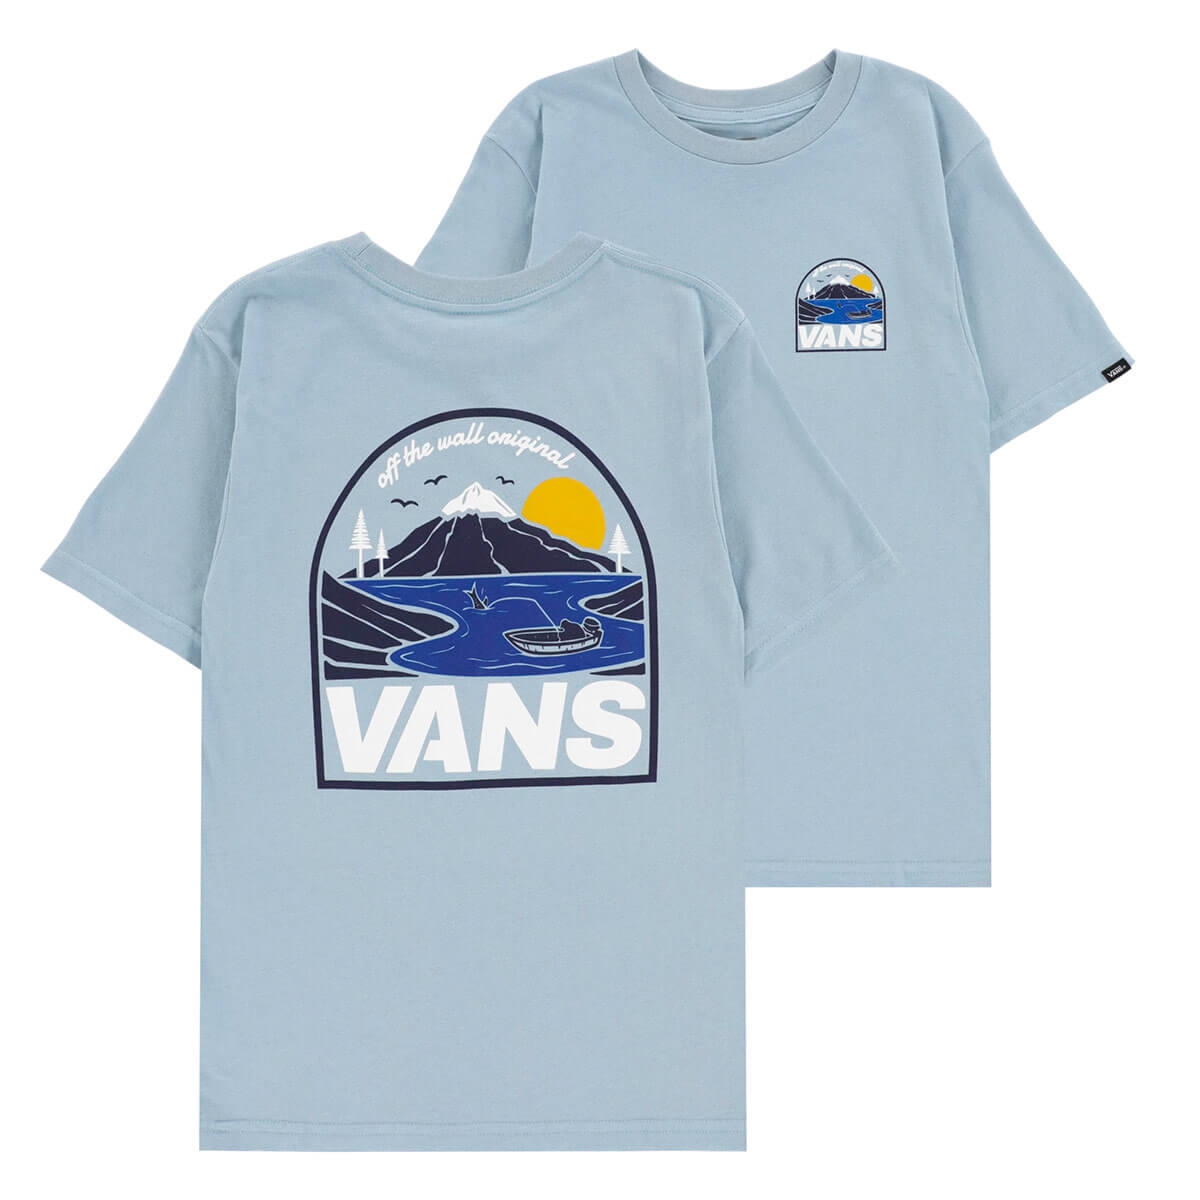 Vans T-shirt s/s Snowy Peak Ashley